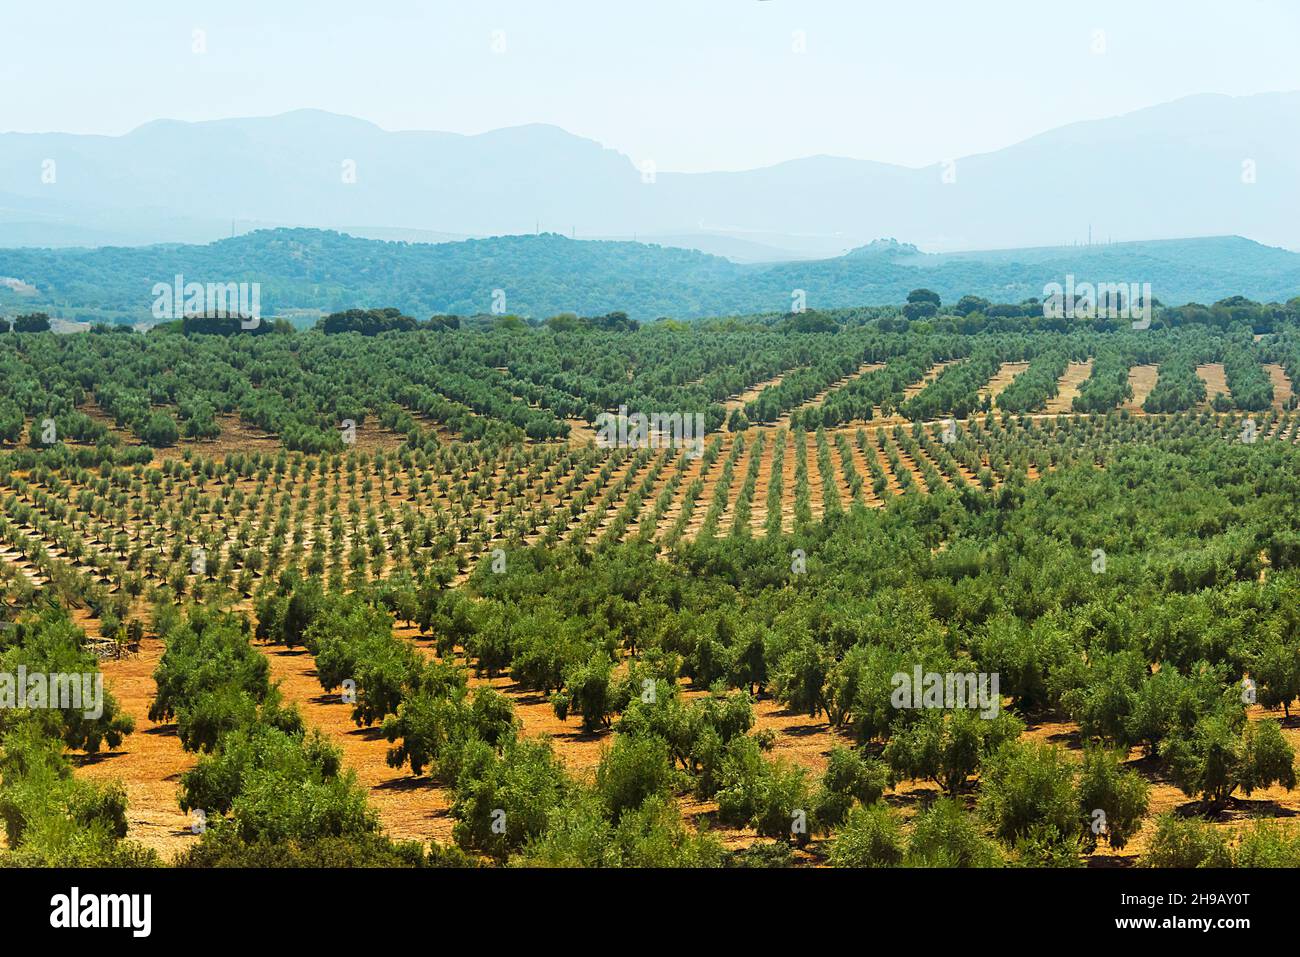 Olive farm, Andalusia Autonomous Community, Spain Stock Photo